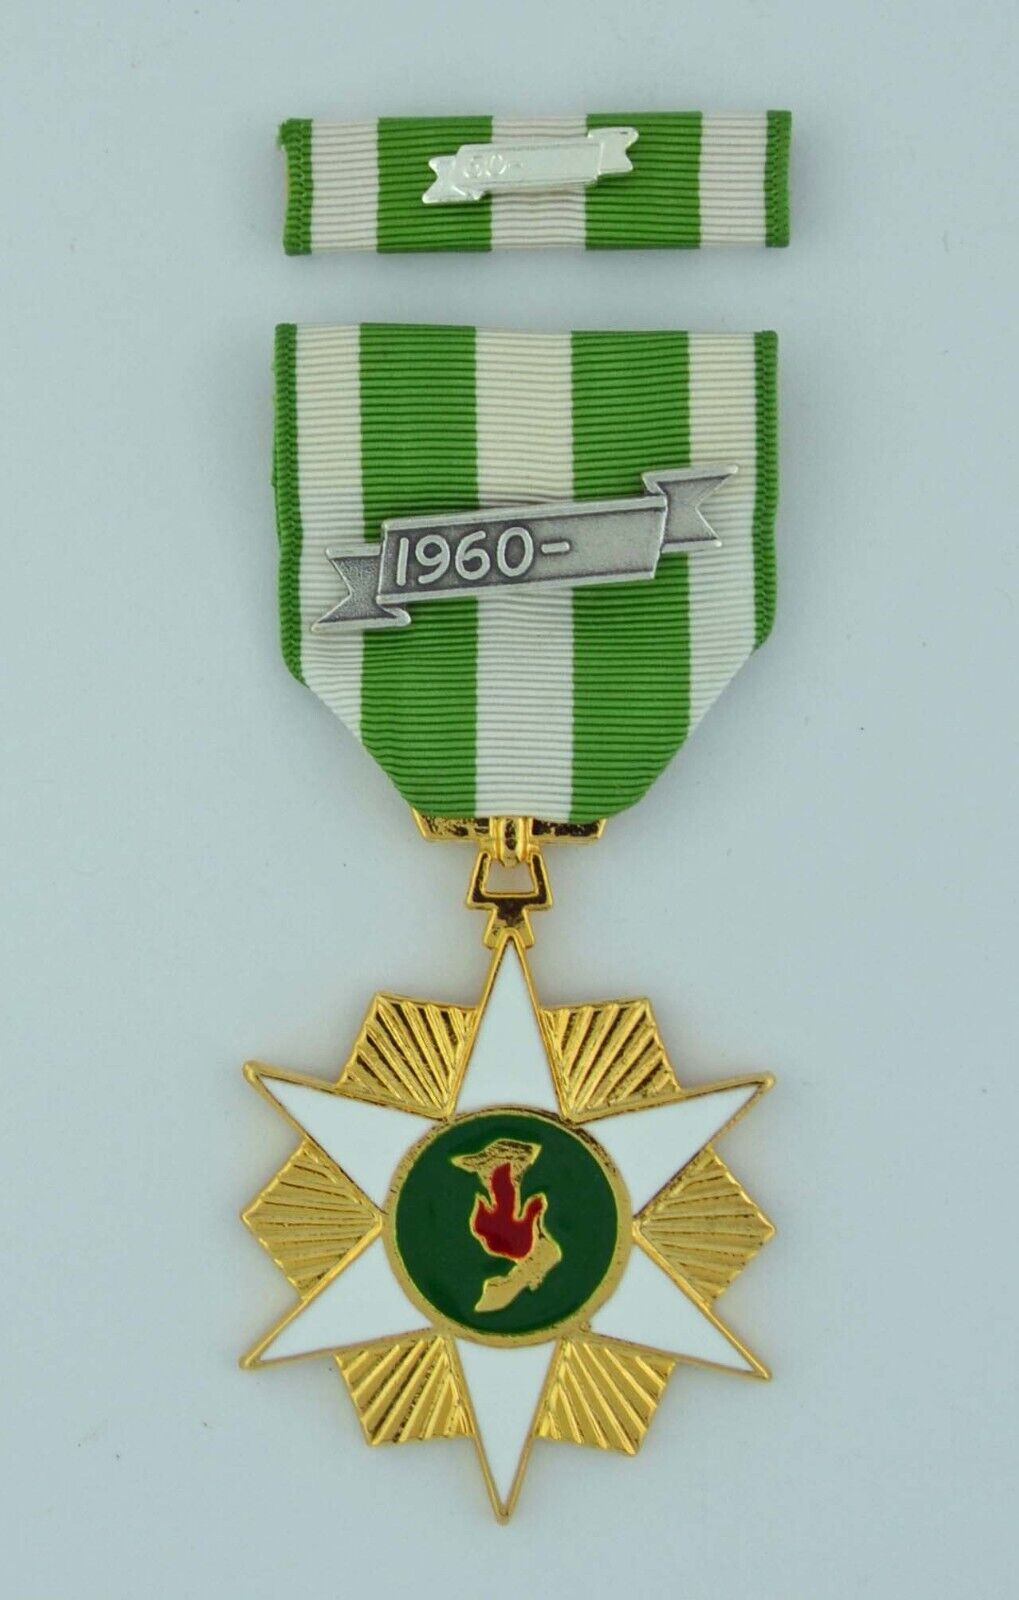 Vietnam War Campaign Medal & Ribbon Bar - Regulation Full Size - USA Made VCM